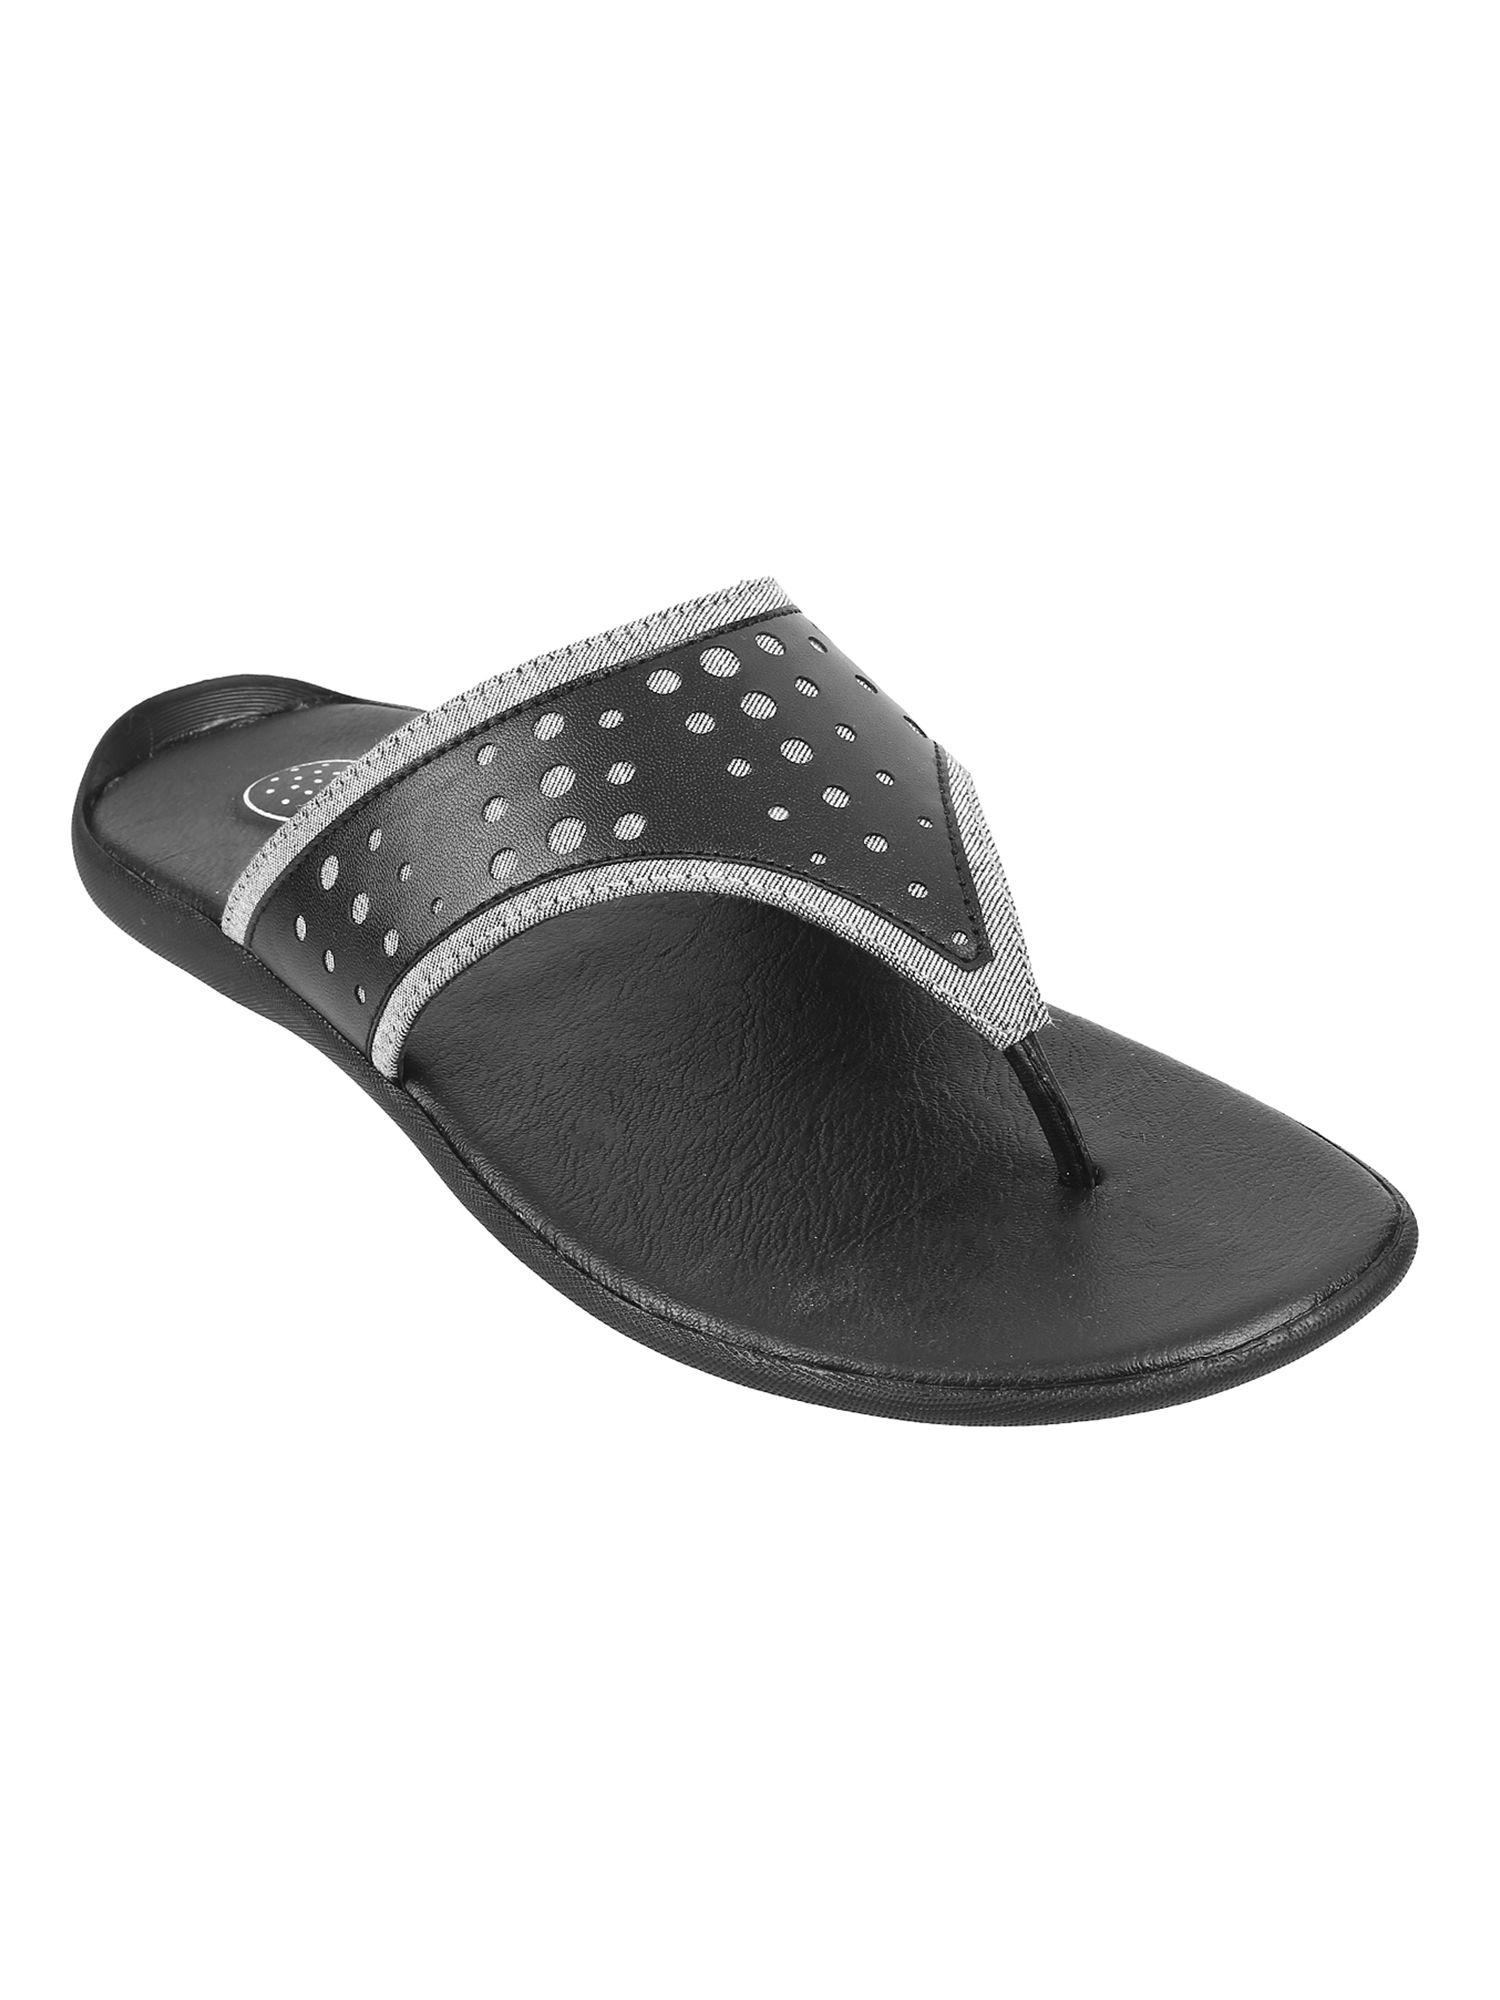 mens-black-flat-chappalsmochi-black-solid-sandals